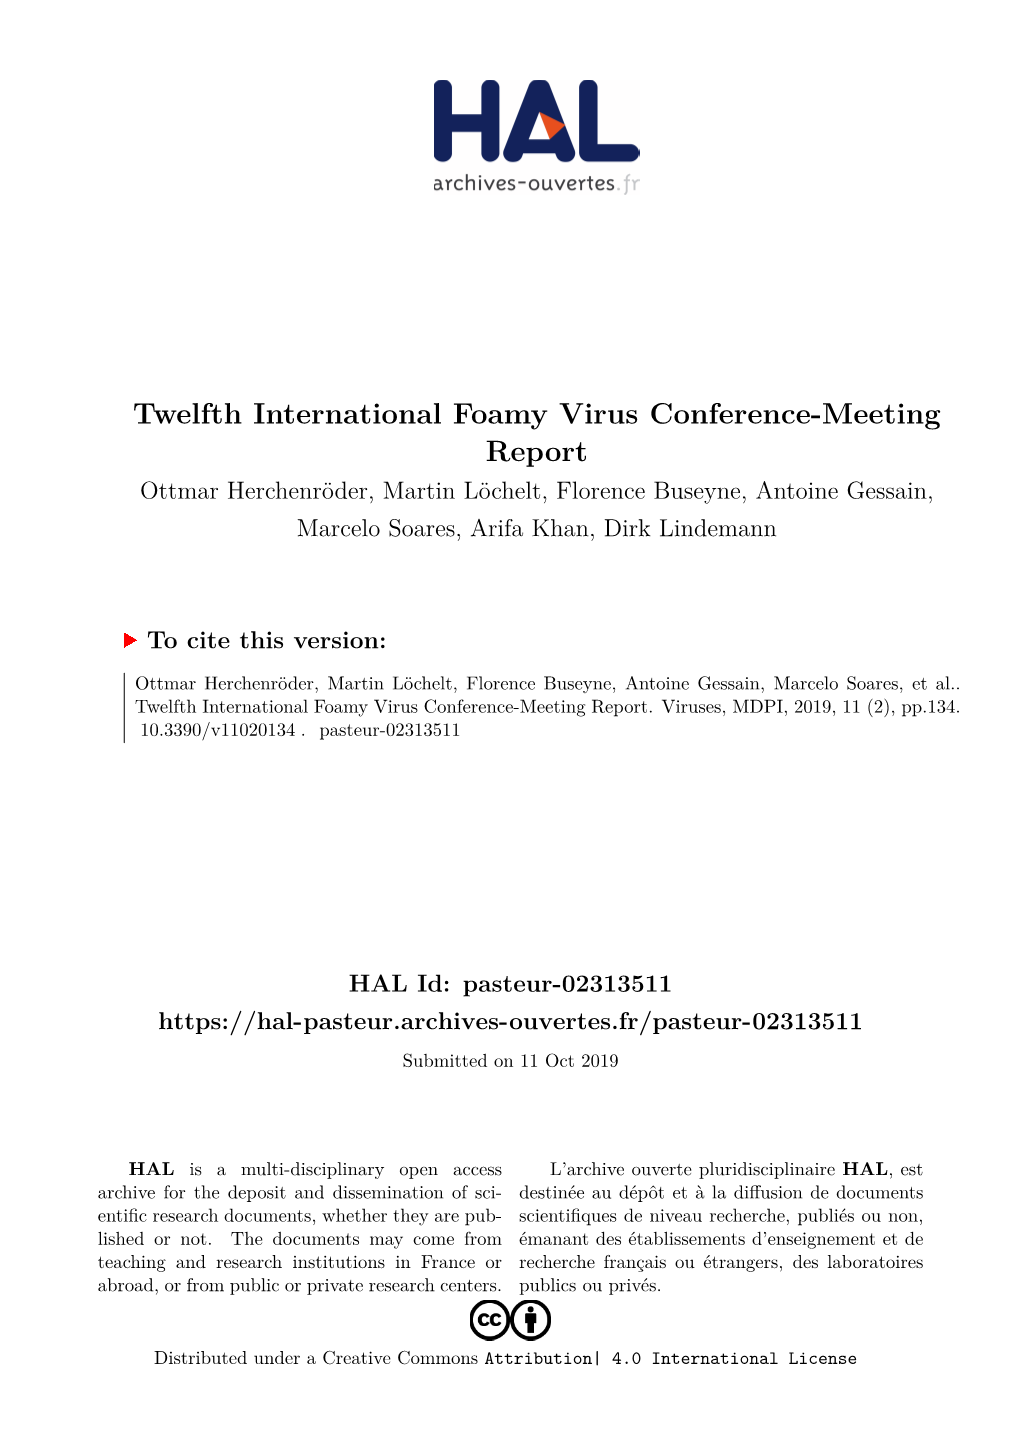 Twelfth International Foamy Virus Conference-Meeting Report